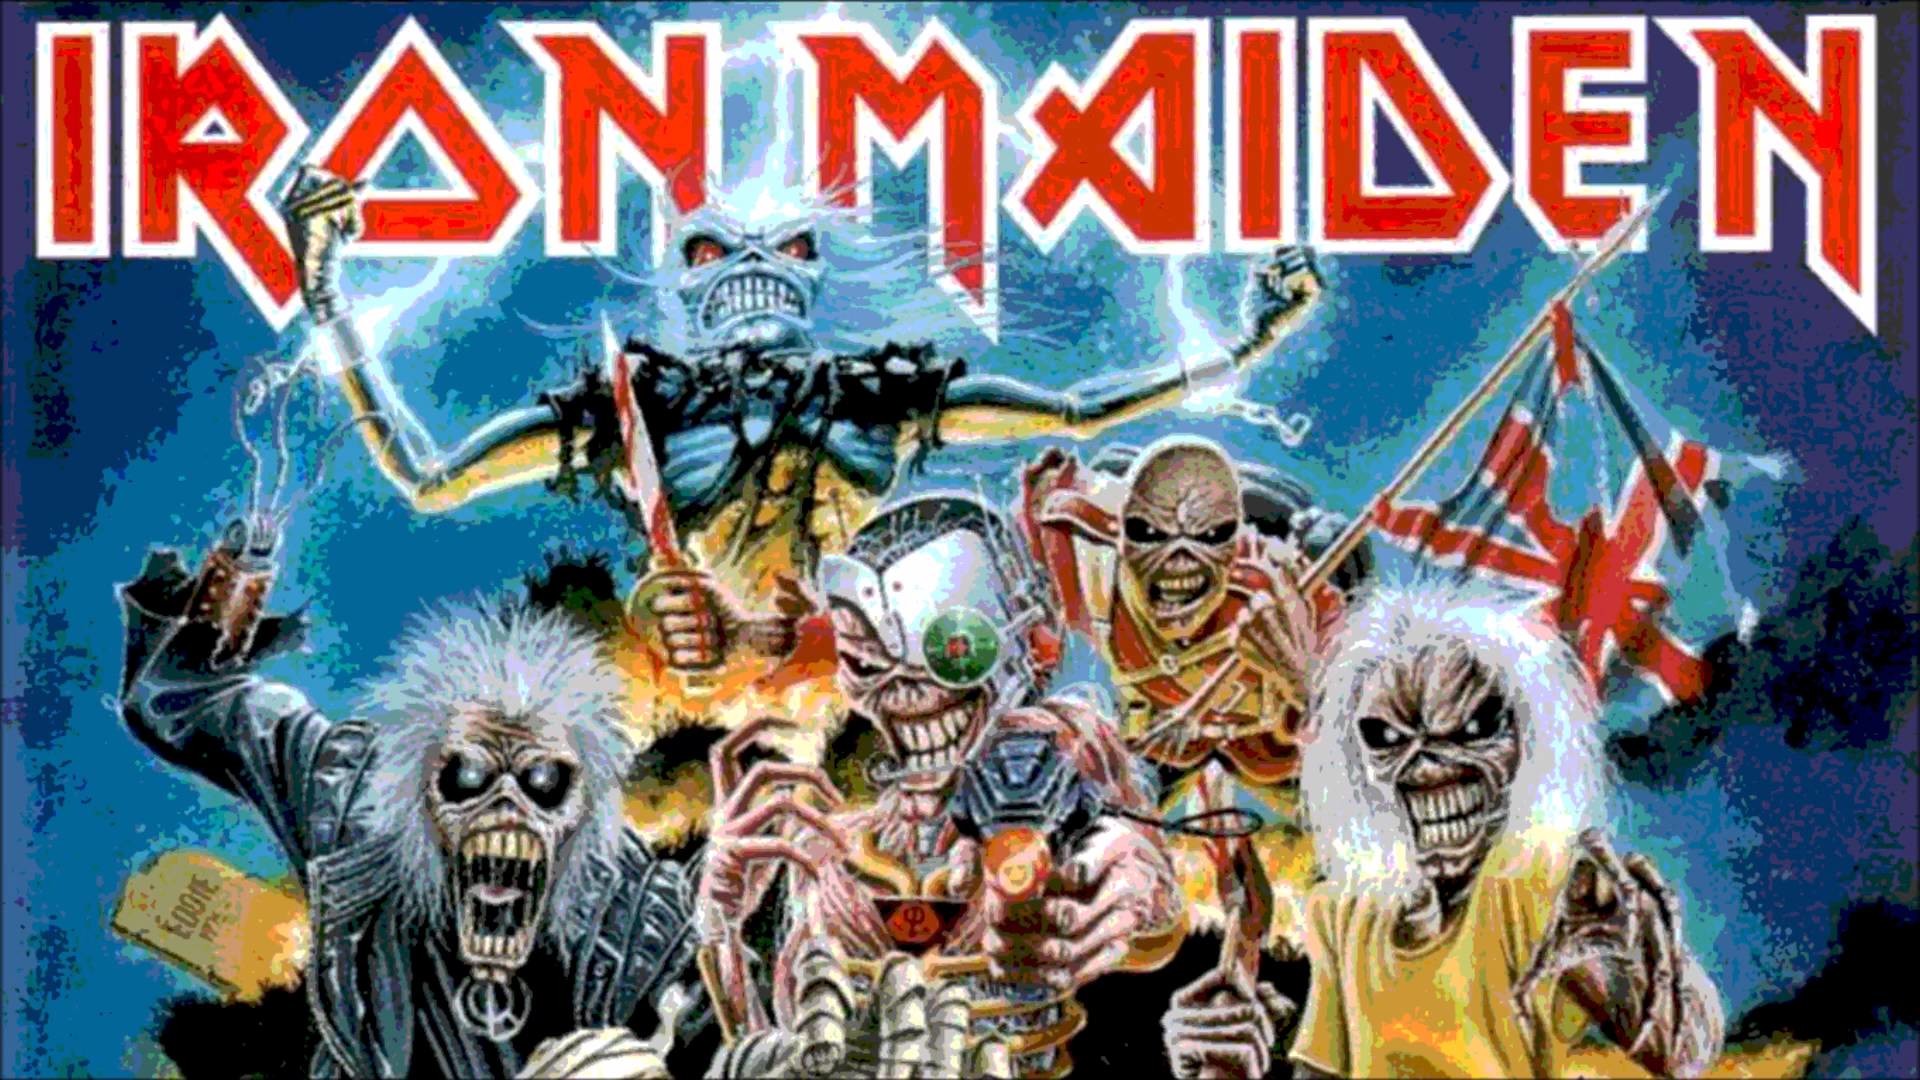 Iron Maiden Wallpaper Widescreen (68+ images)